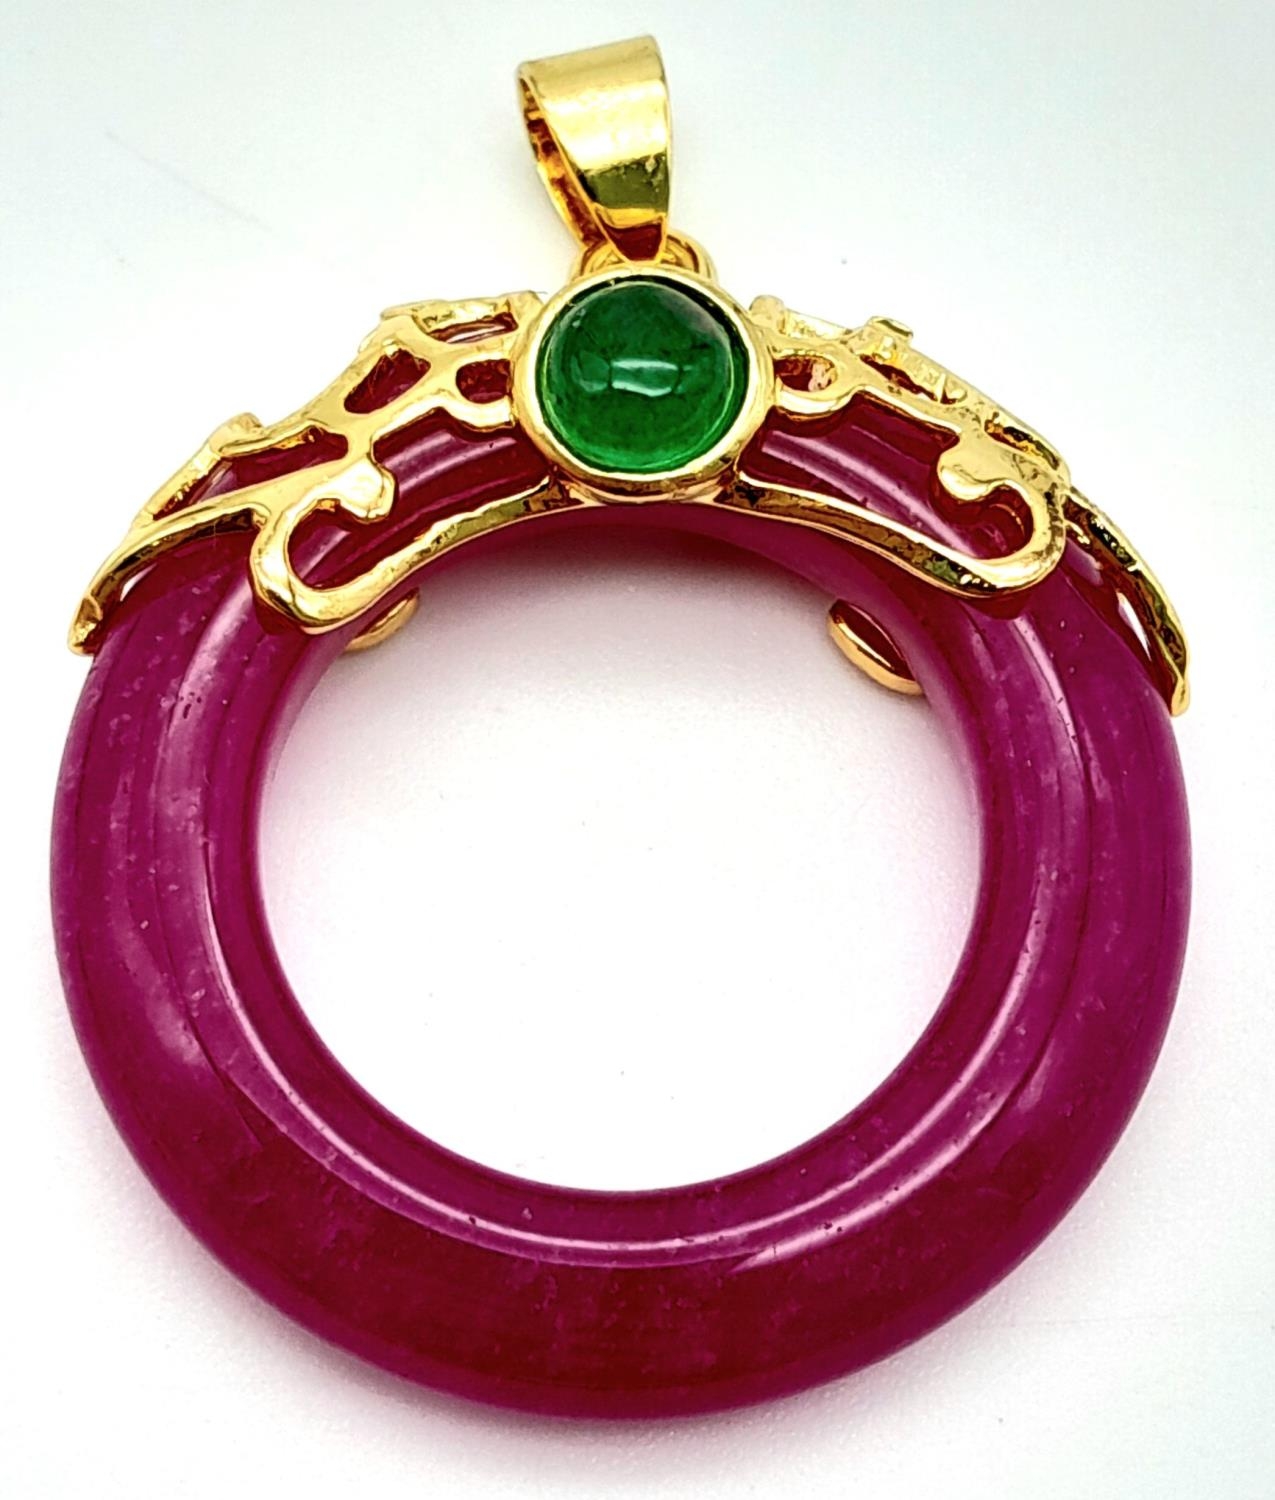 A Magenta Jade Pendant on Gilded Backing. 4cm length, 3cm diameter, 6.79g total weight.